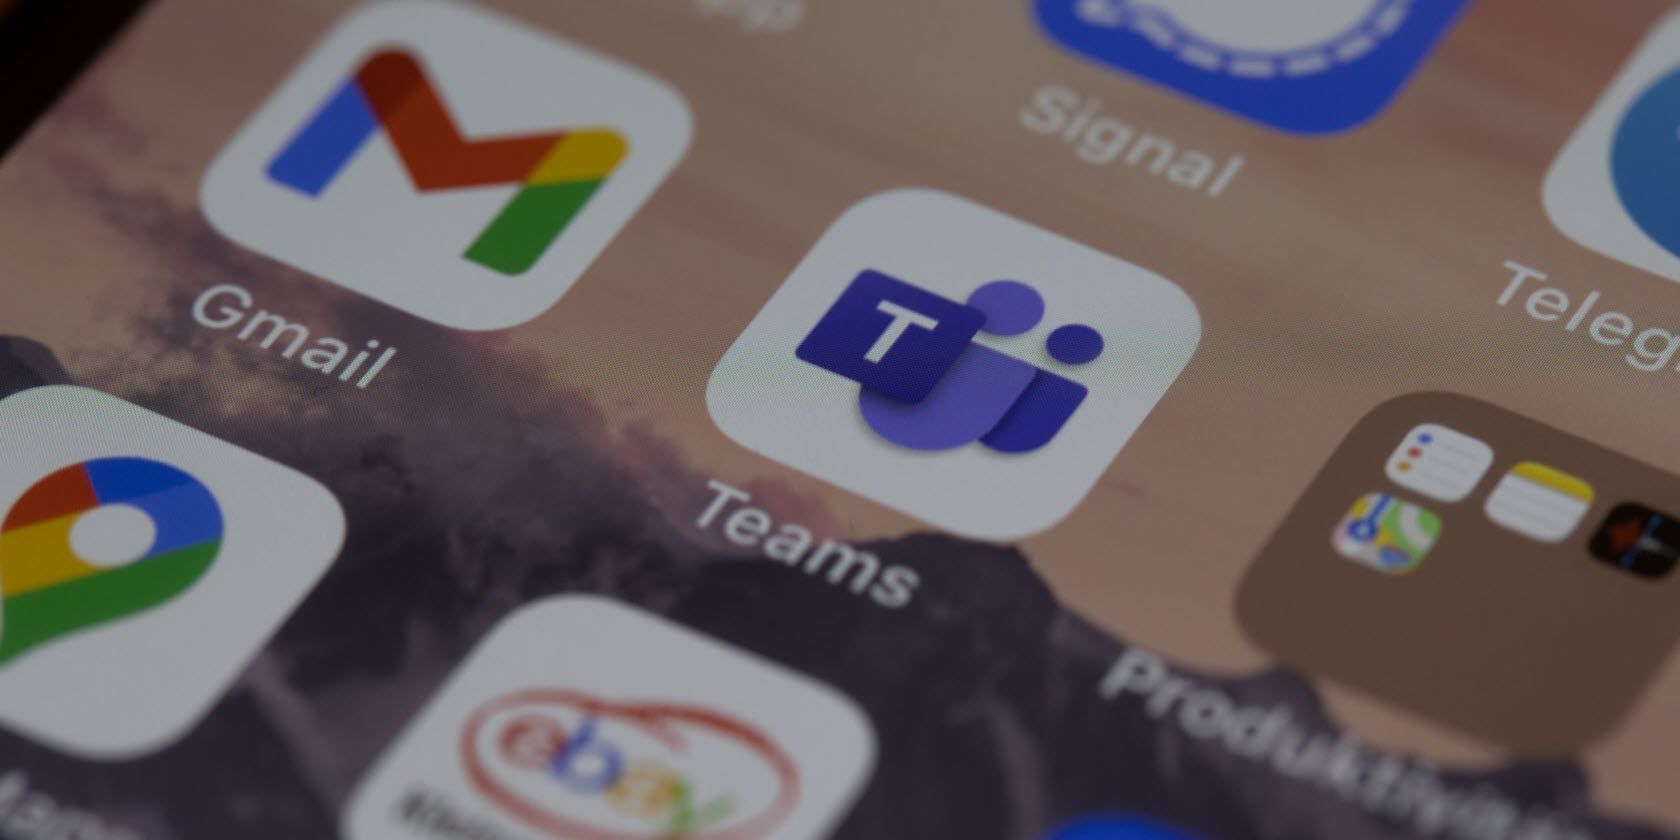 Microsoft-Teams-mobile-app-logo.jpg